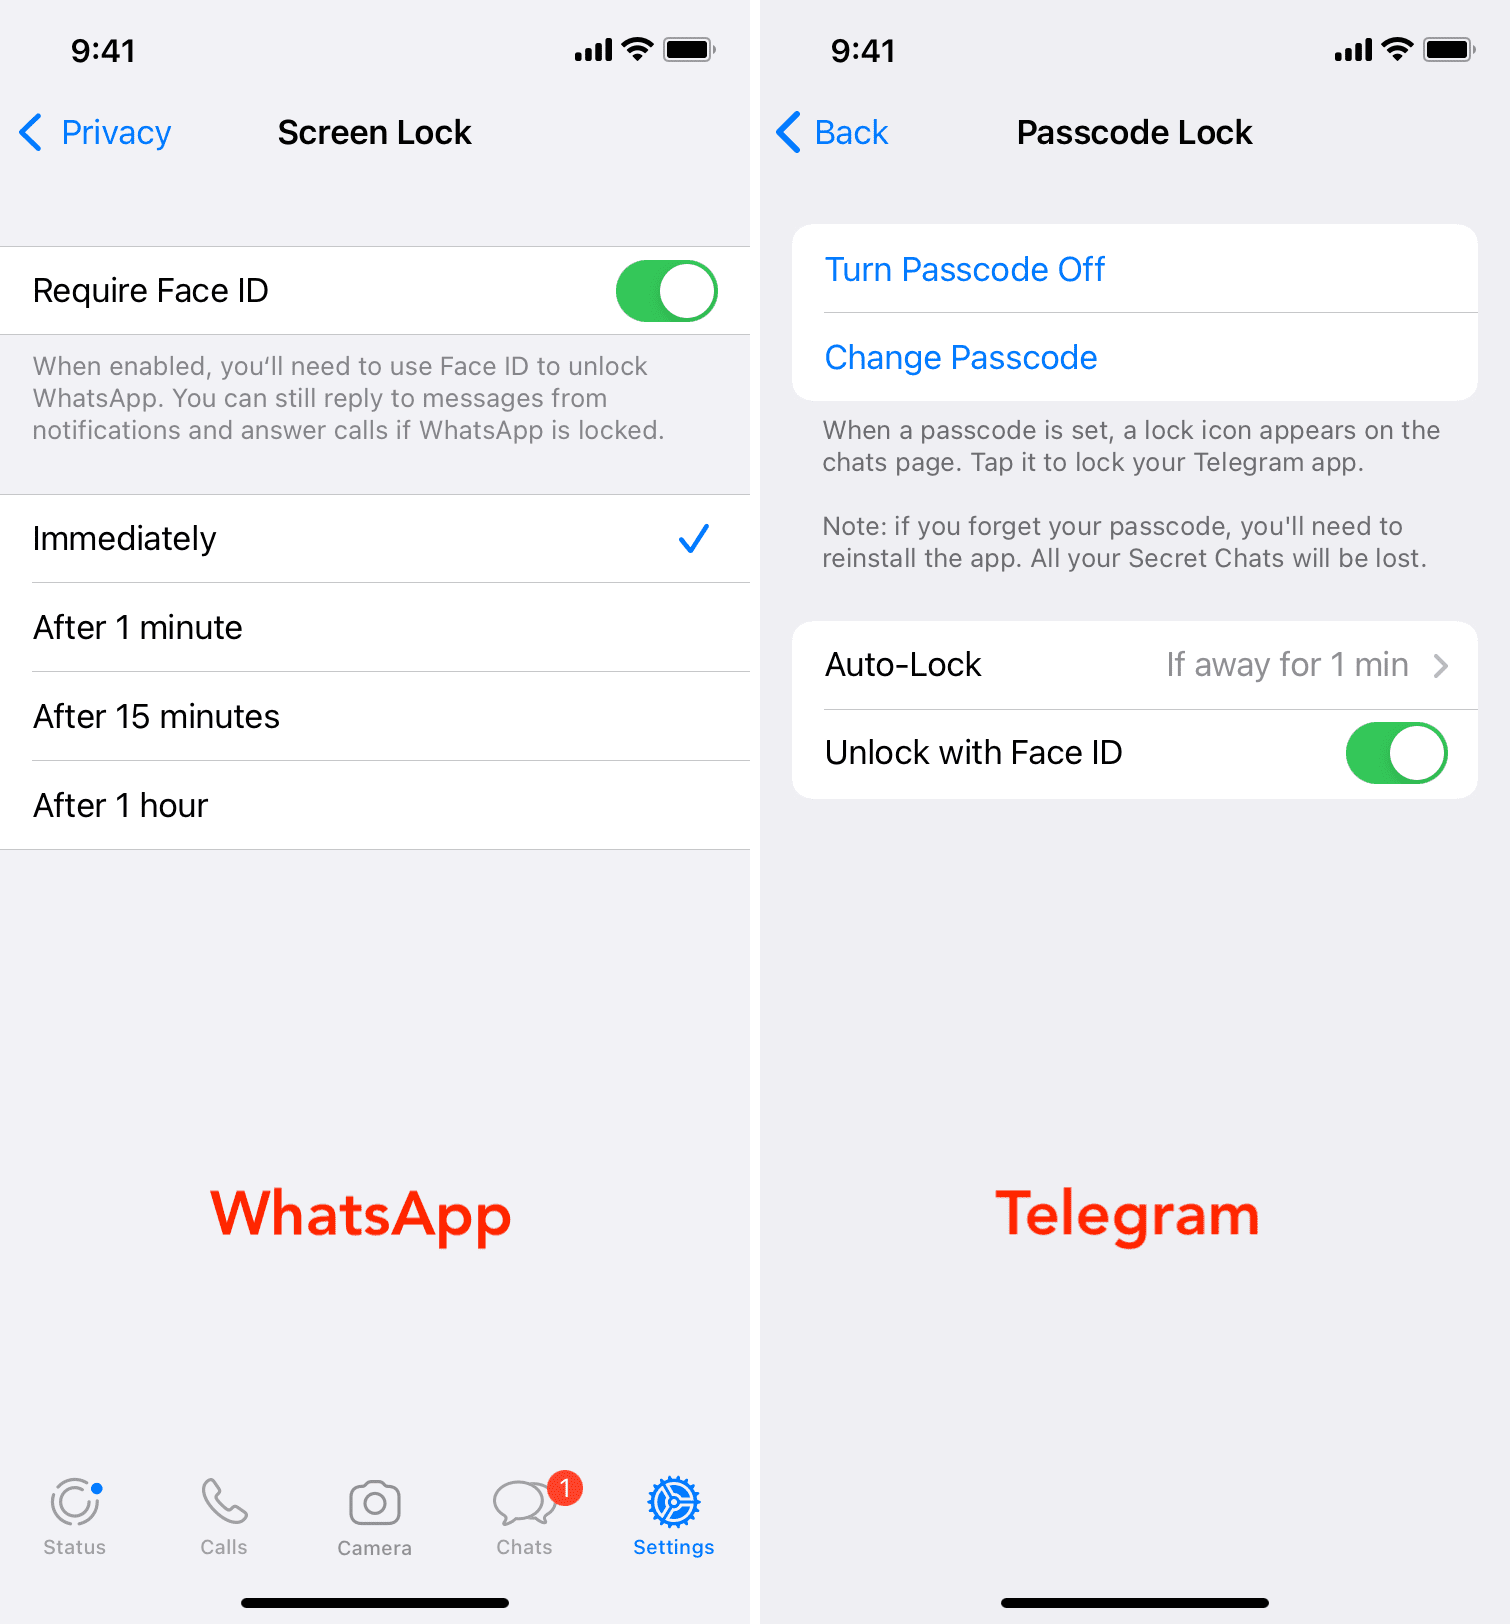 App lock settings on WhatsApp and Telegram on iPhone